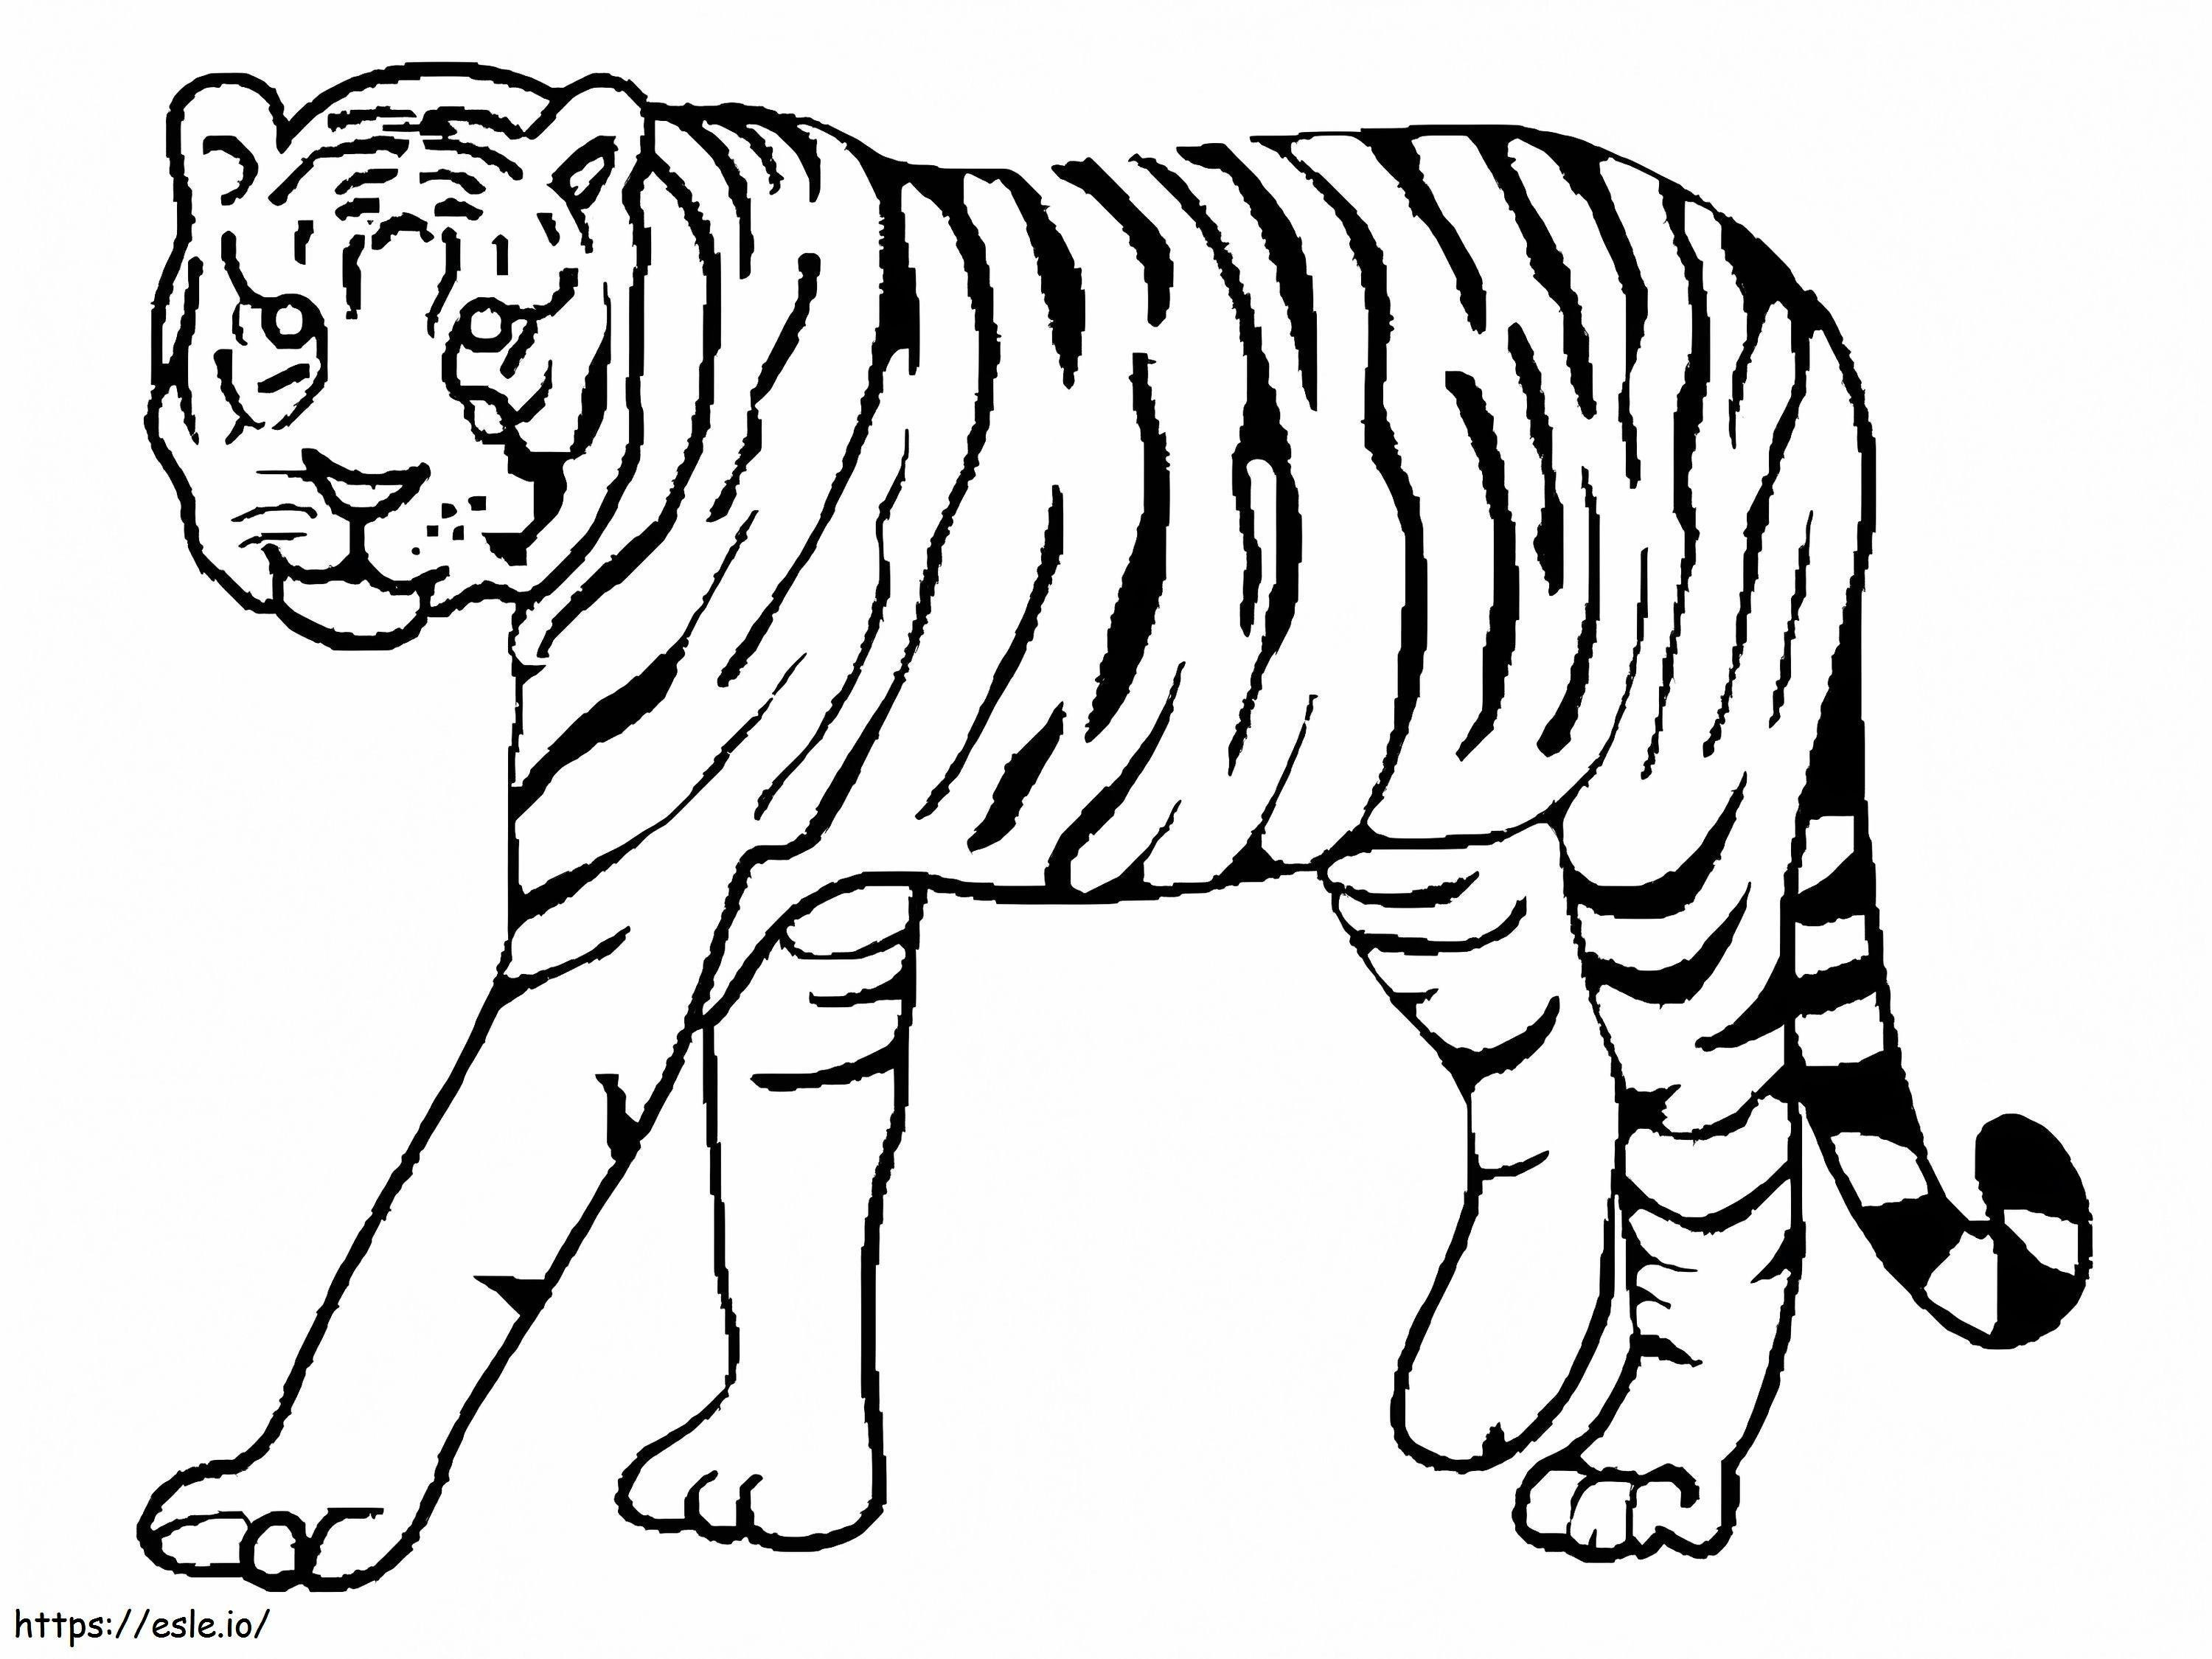 Walking Tiger coloring page